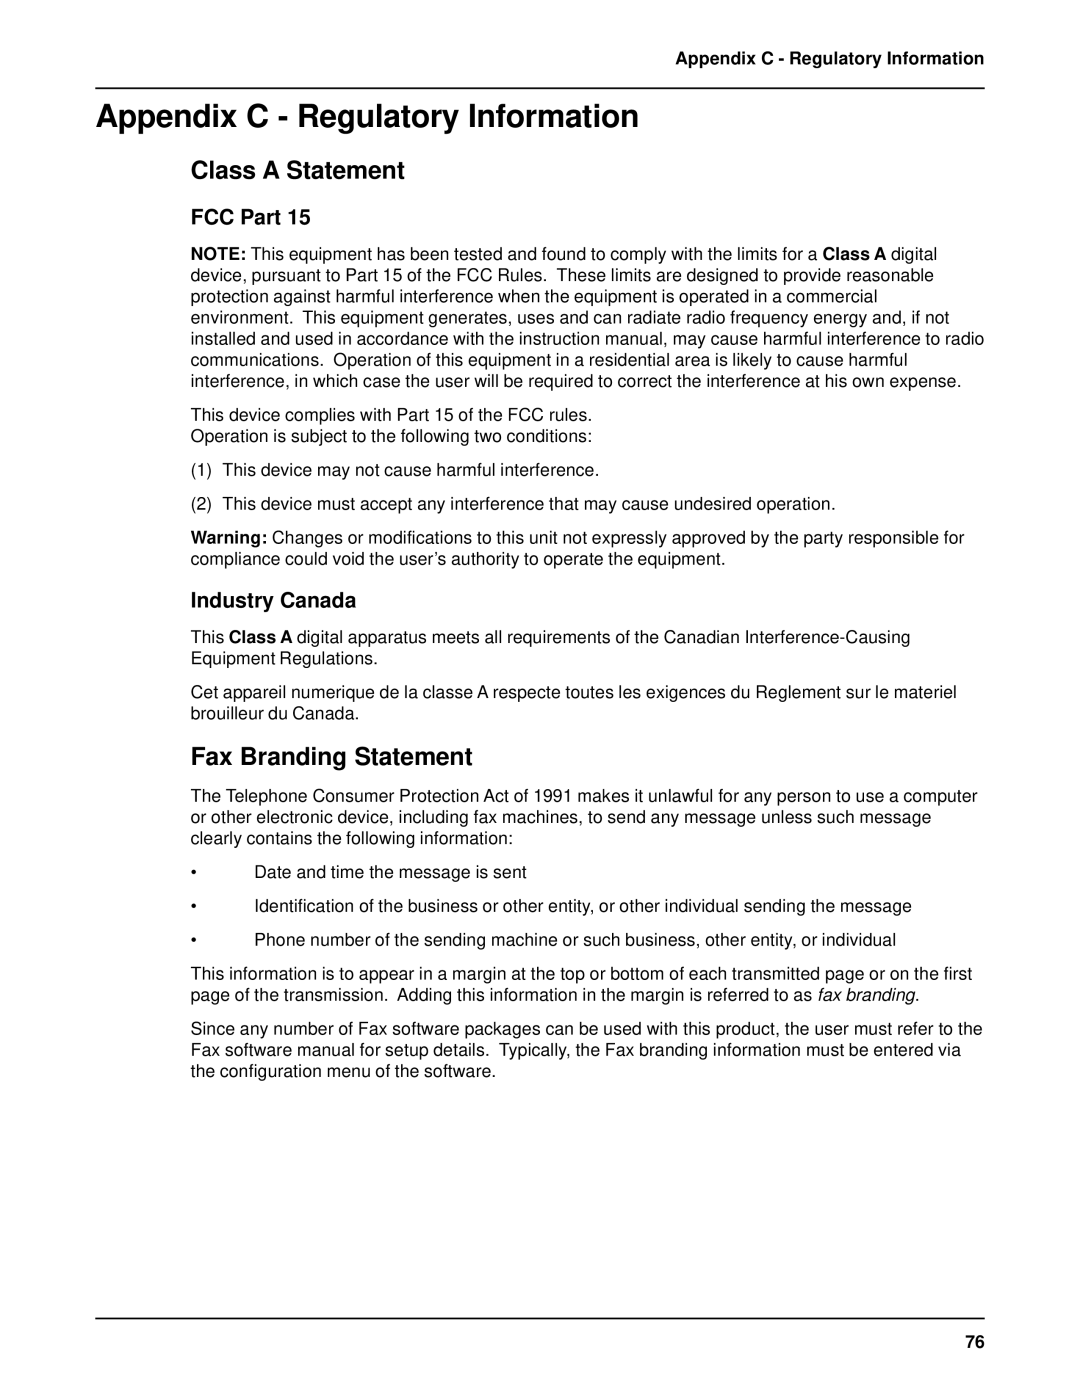 Multi-Tech Systems MVP 800 manual Appendix C - Regulatory Information, Class A Statement, Fax Branding Statement, FCC Part 